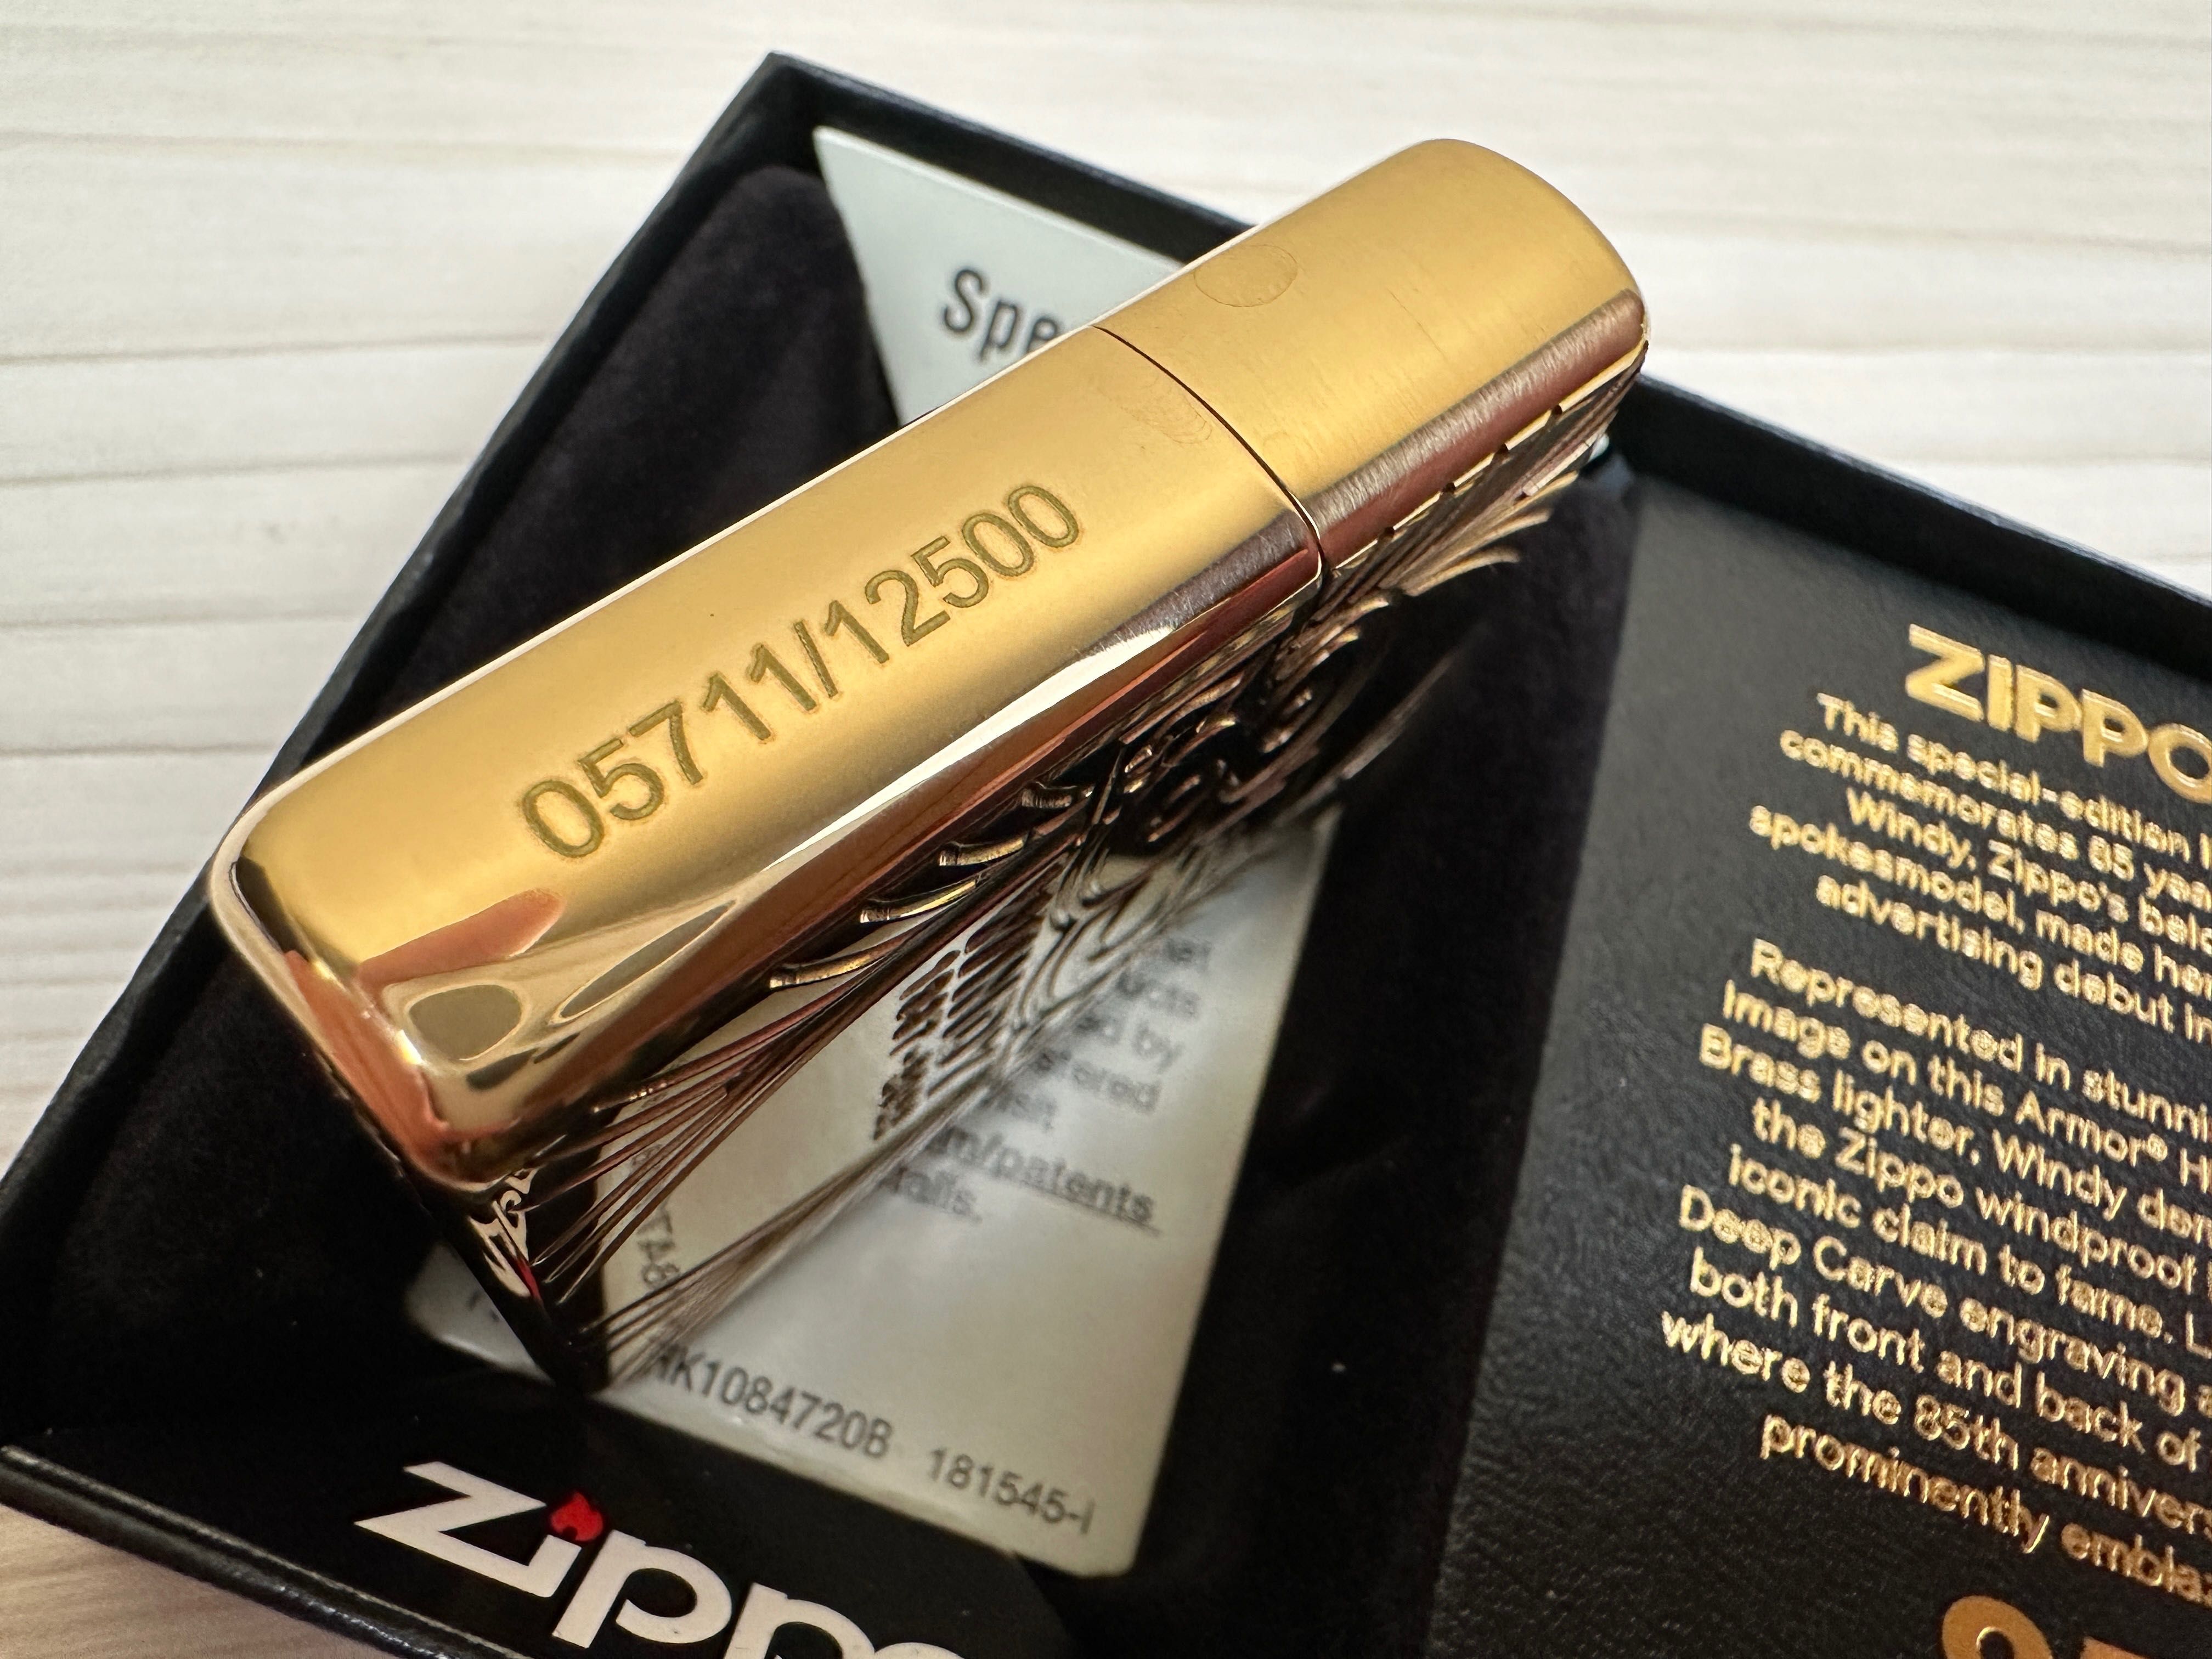 Зажигалка Zippo 48413 Windy 85th Anniversary Collectible HPolish Brass